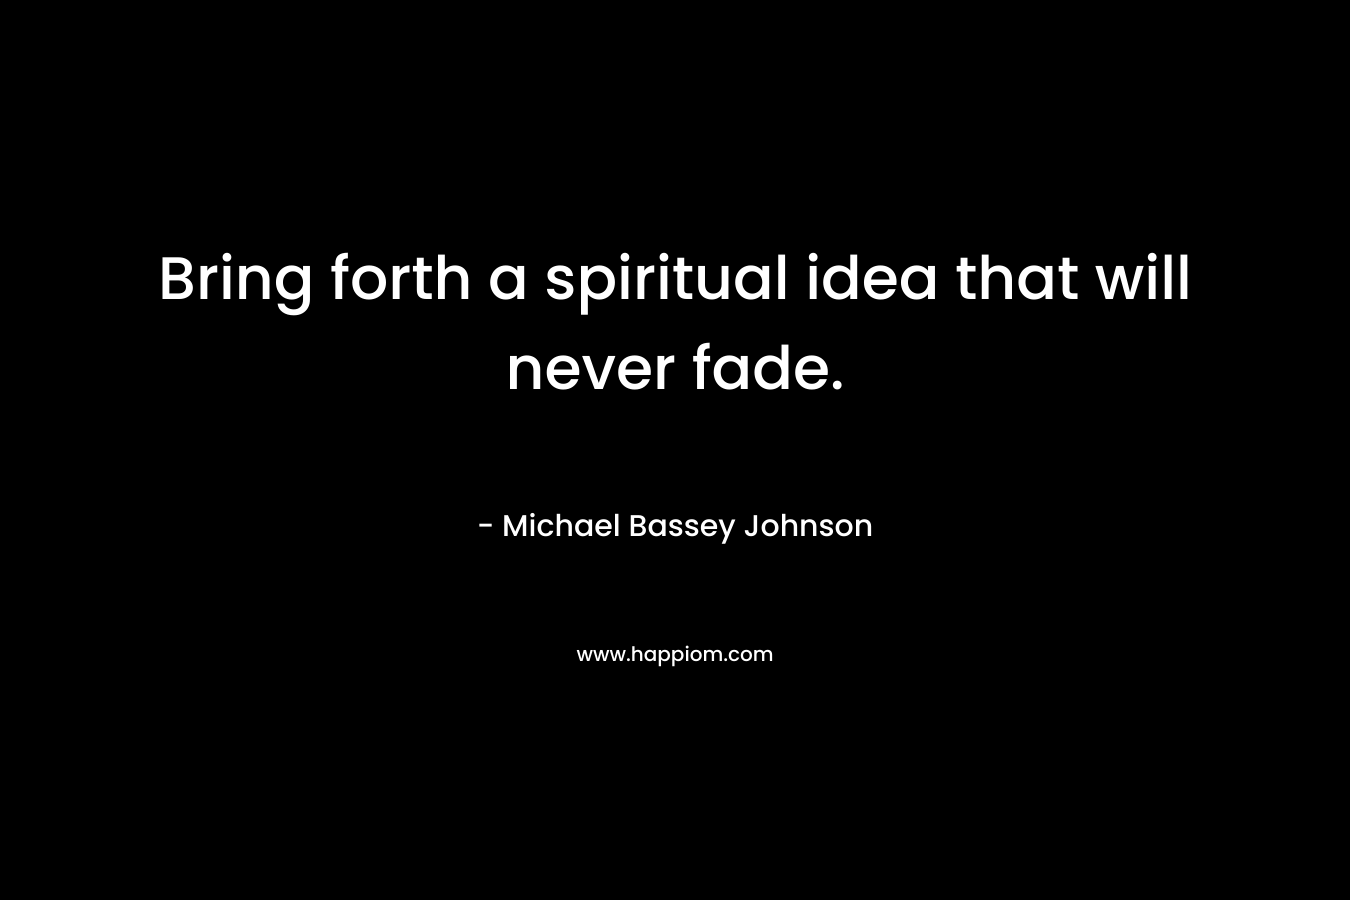 Bring forth a spiritual idea that will never fade.